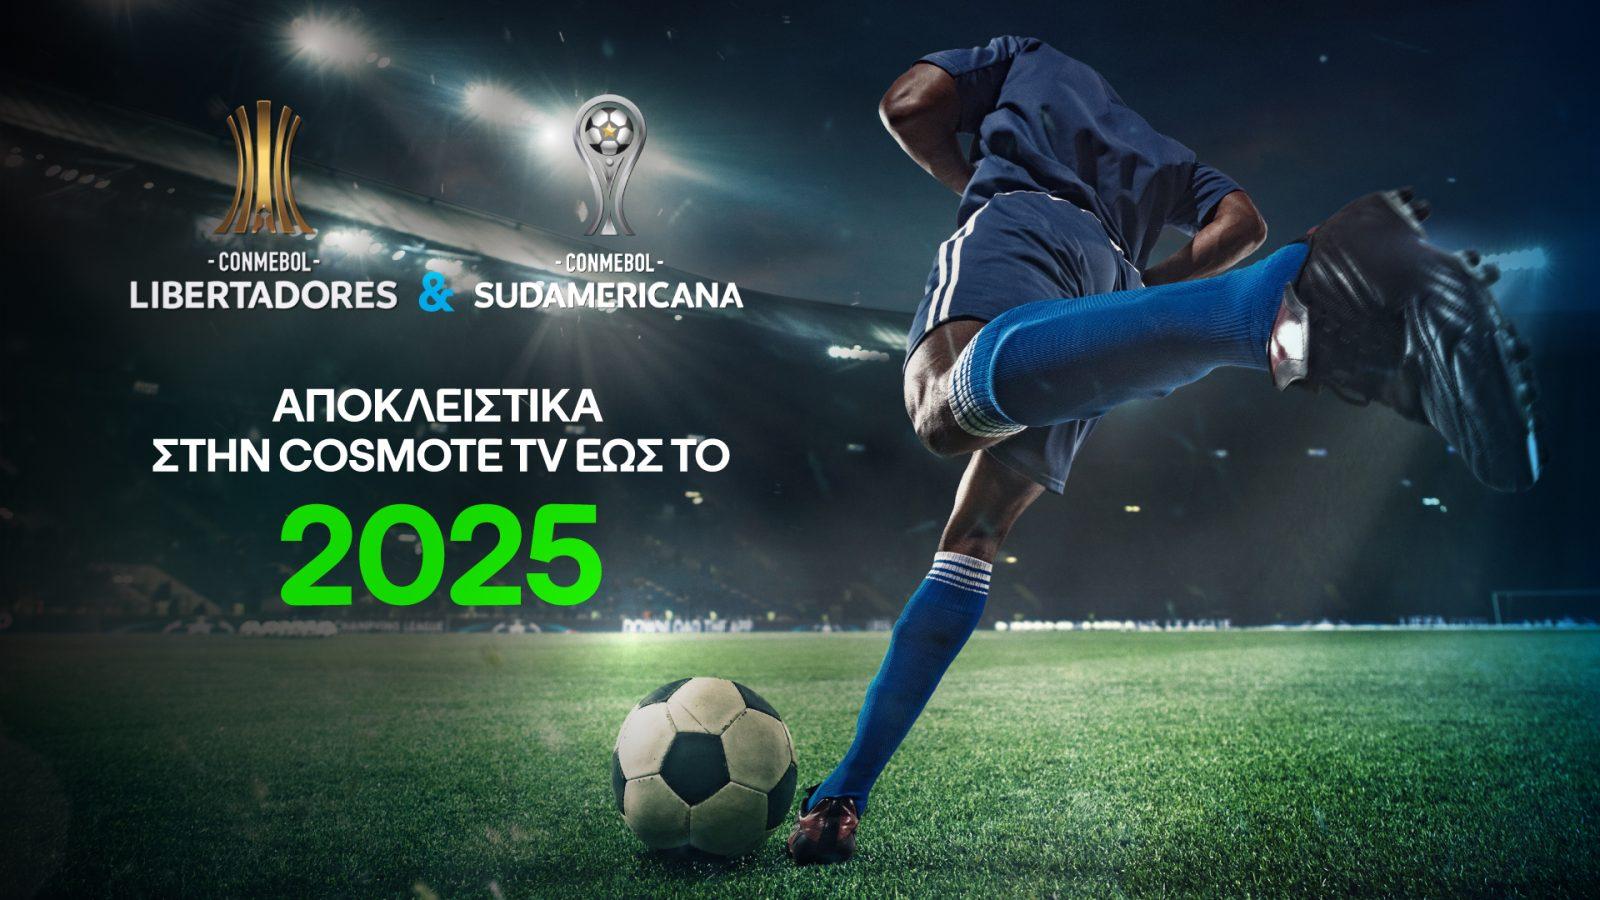 Copa Libertadores & Copa Sudamericana στην Cosmote TV.